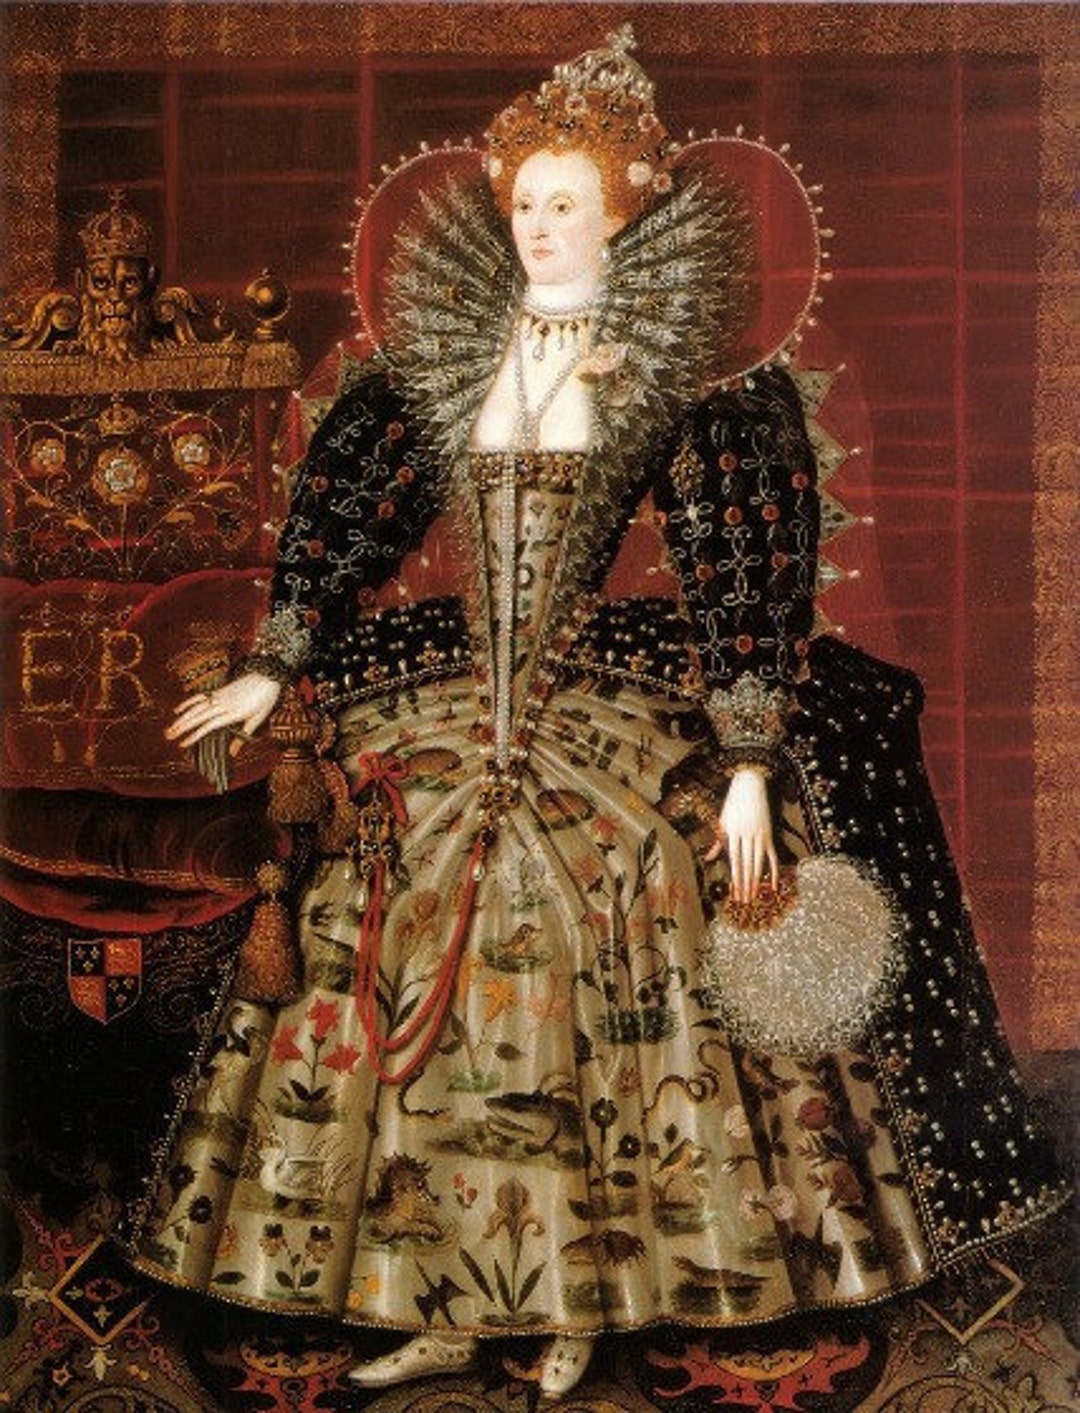 Print of Queen Elizabeth I by Hilliard - Etsy Denmark